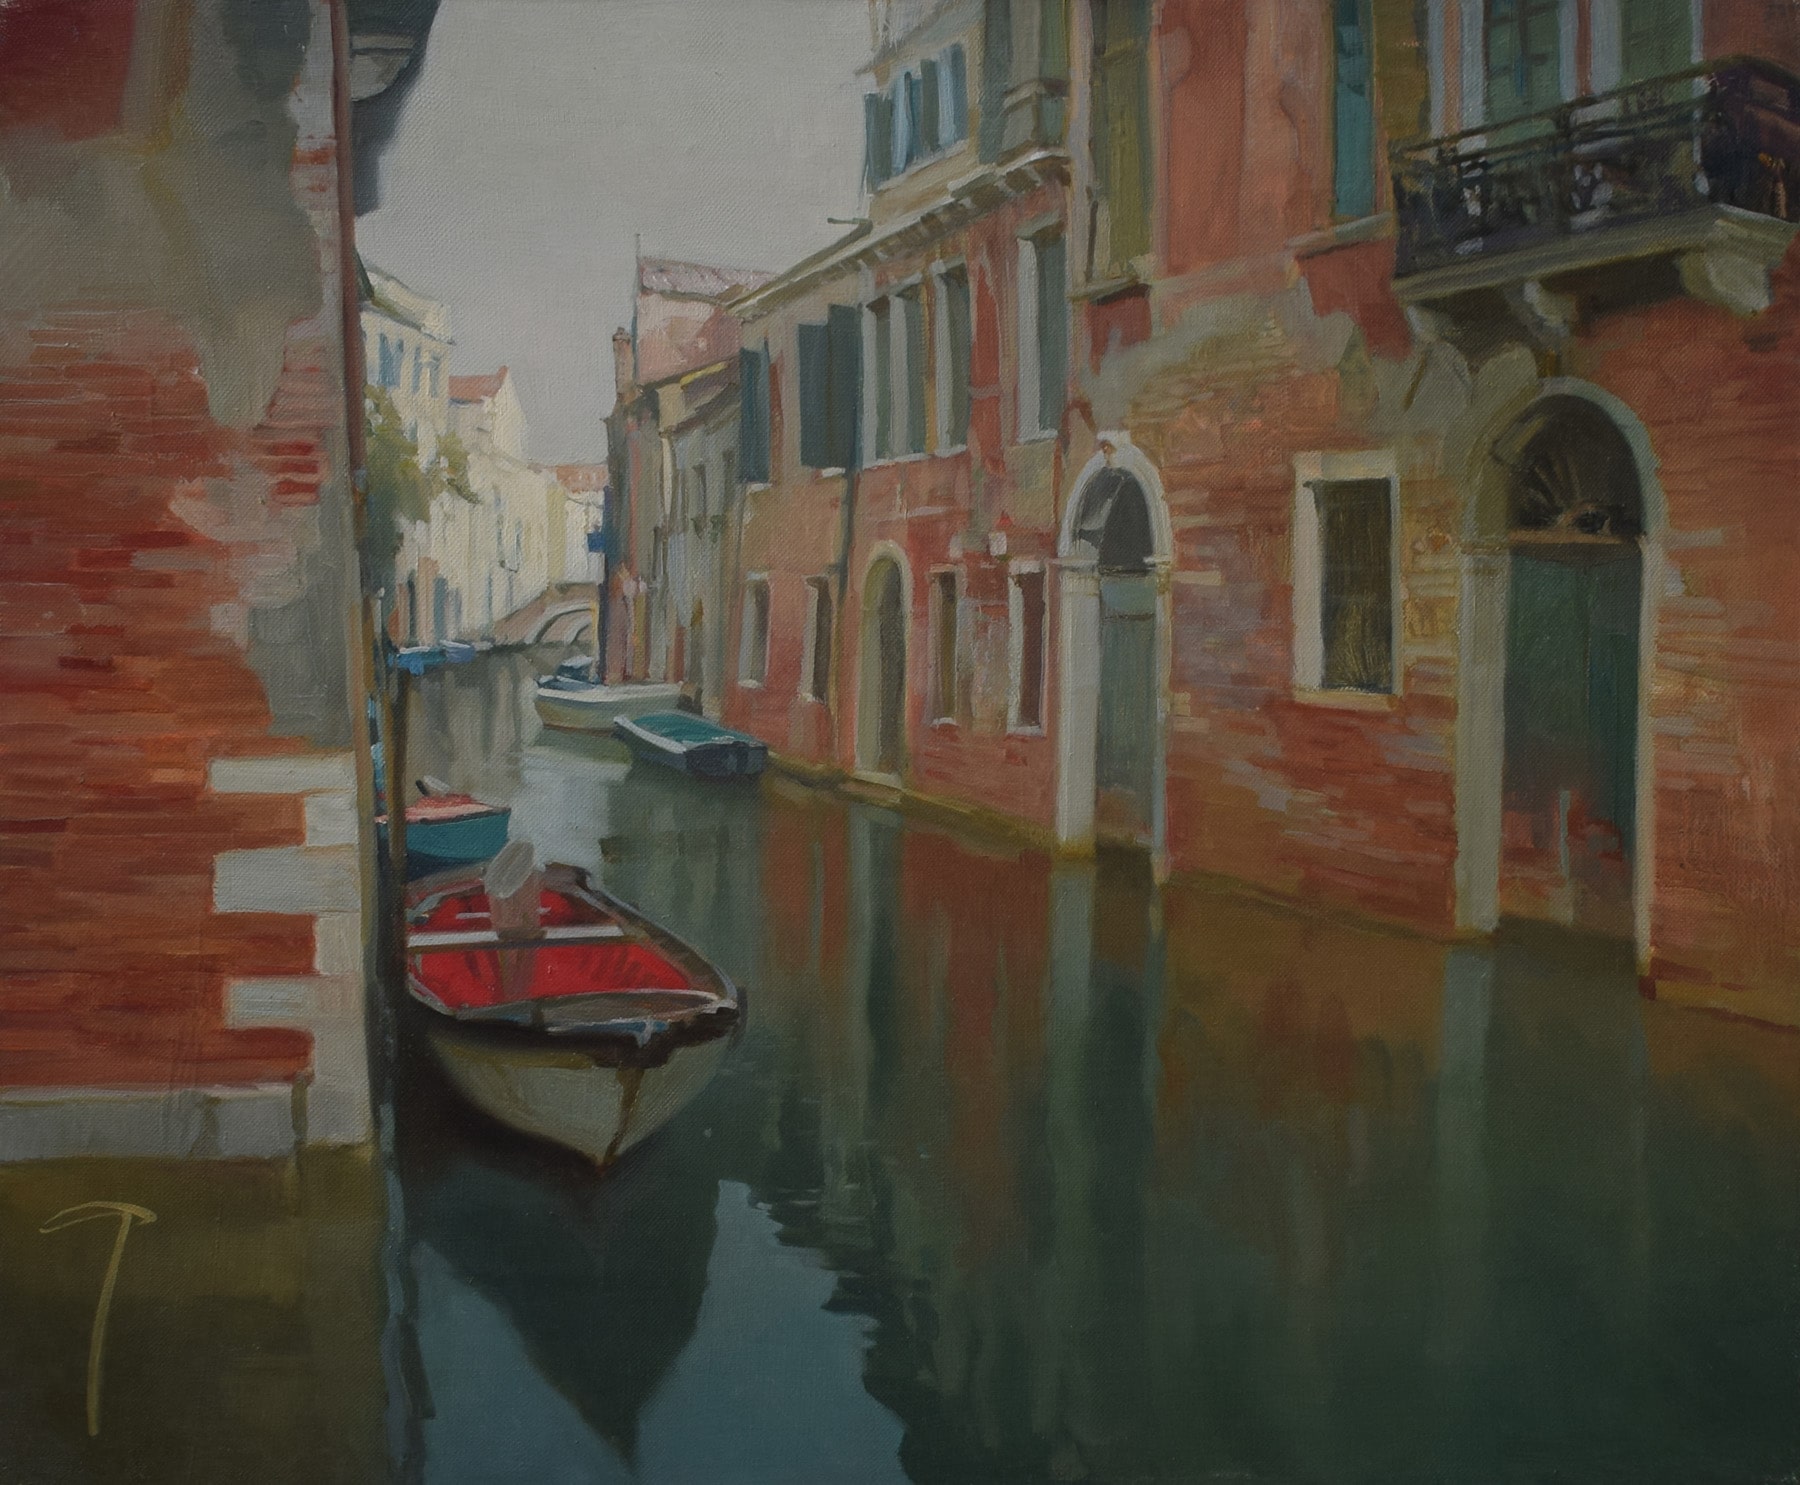 Rain in Venice